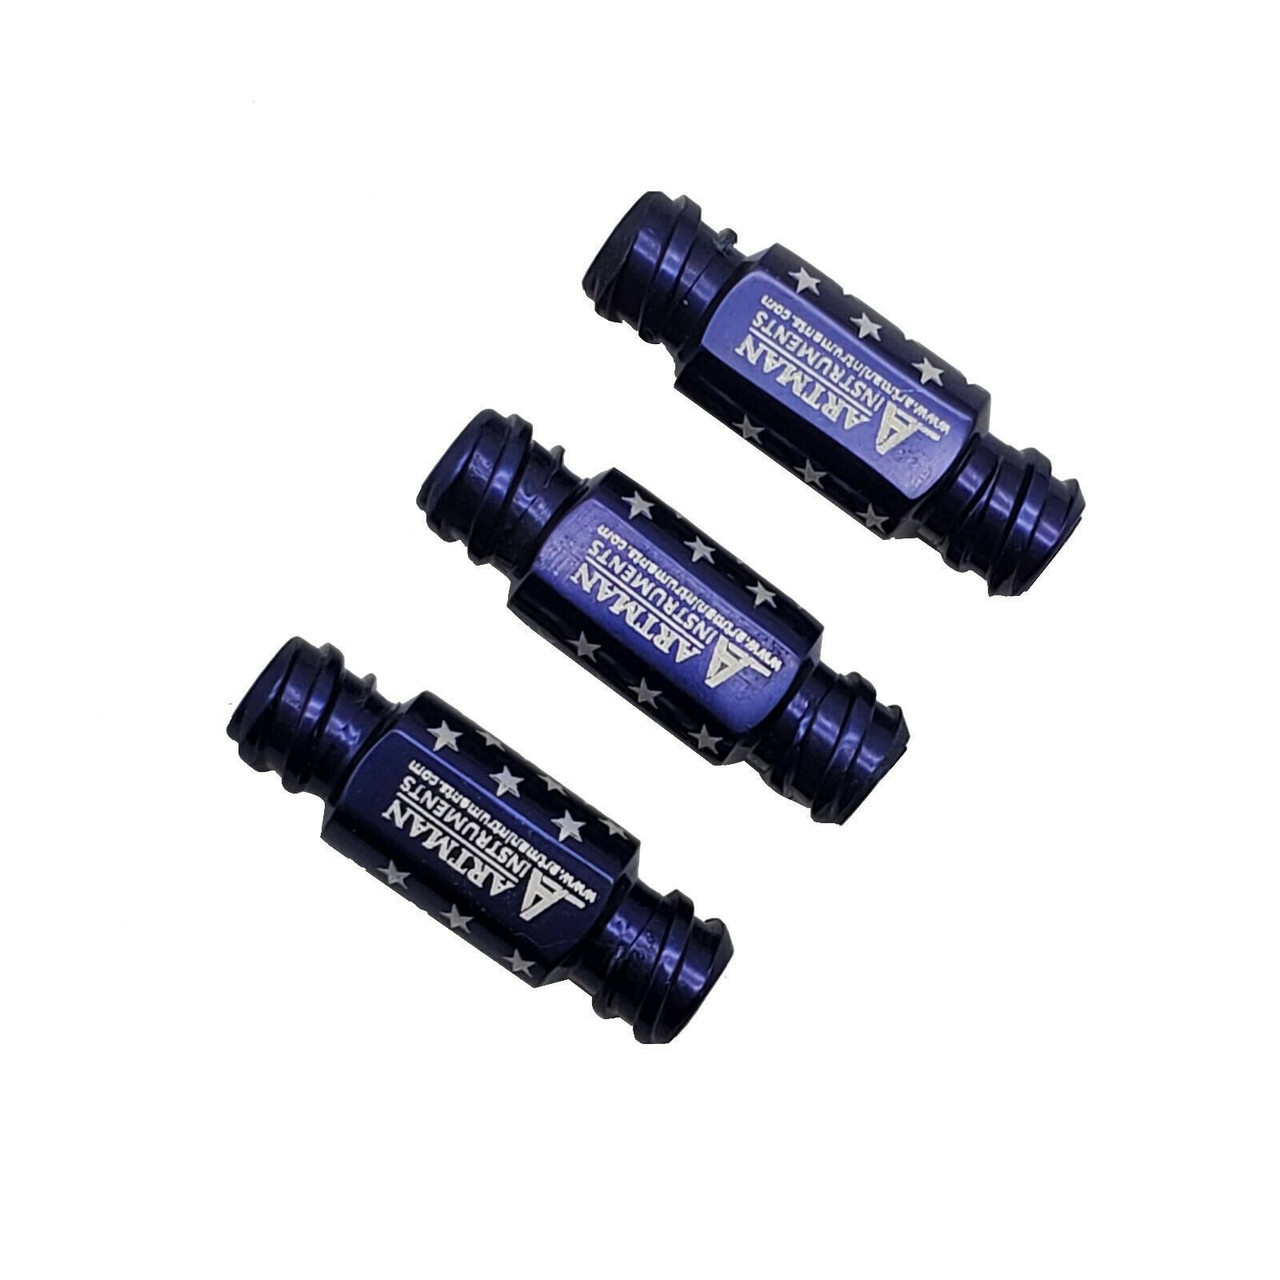 Transfer Adapter set of 3 for Luer Lock Cannula 3mm Liposuction ARTMAN brand